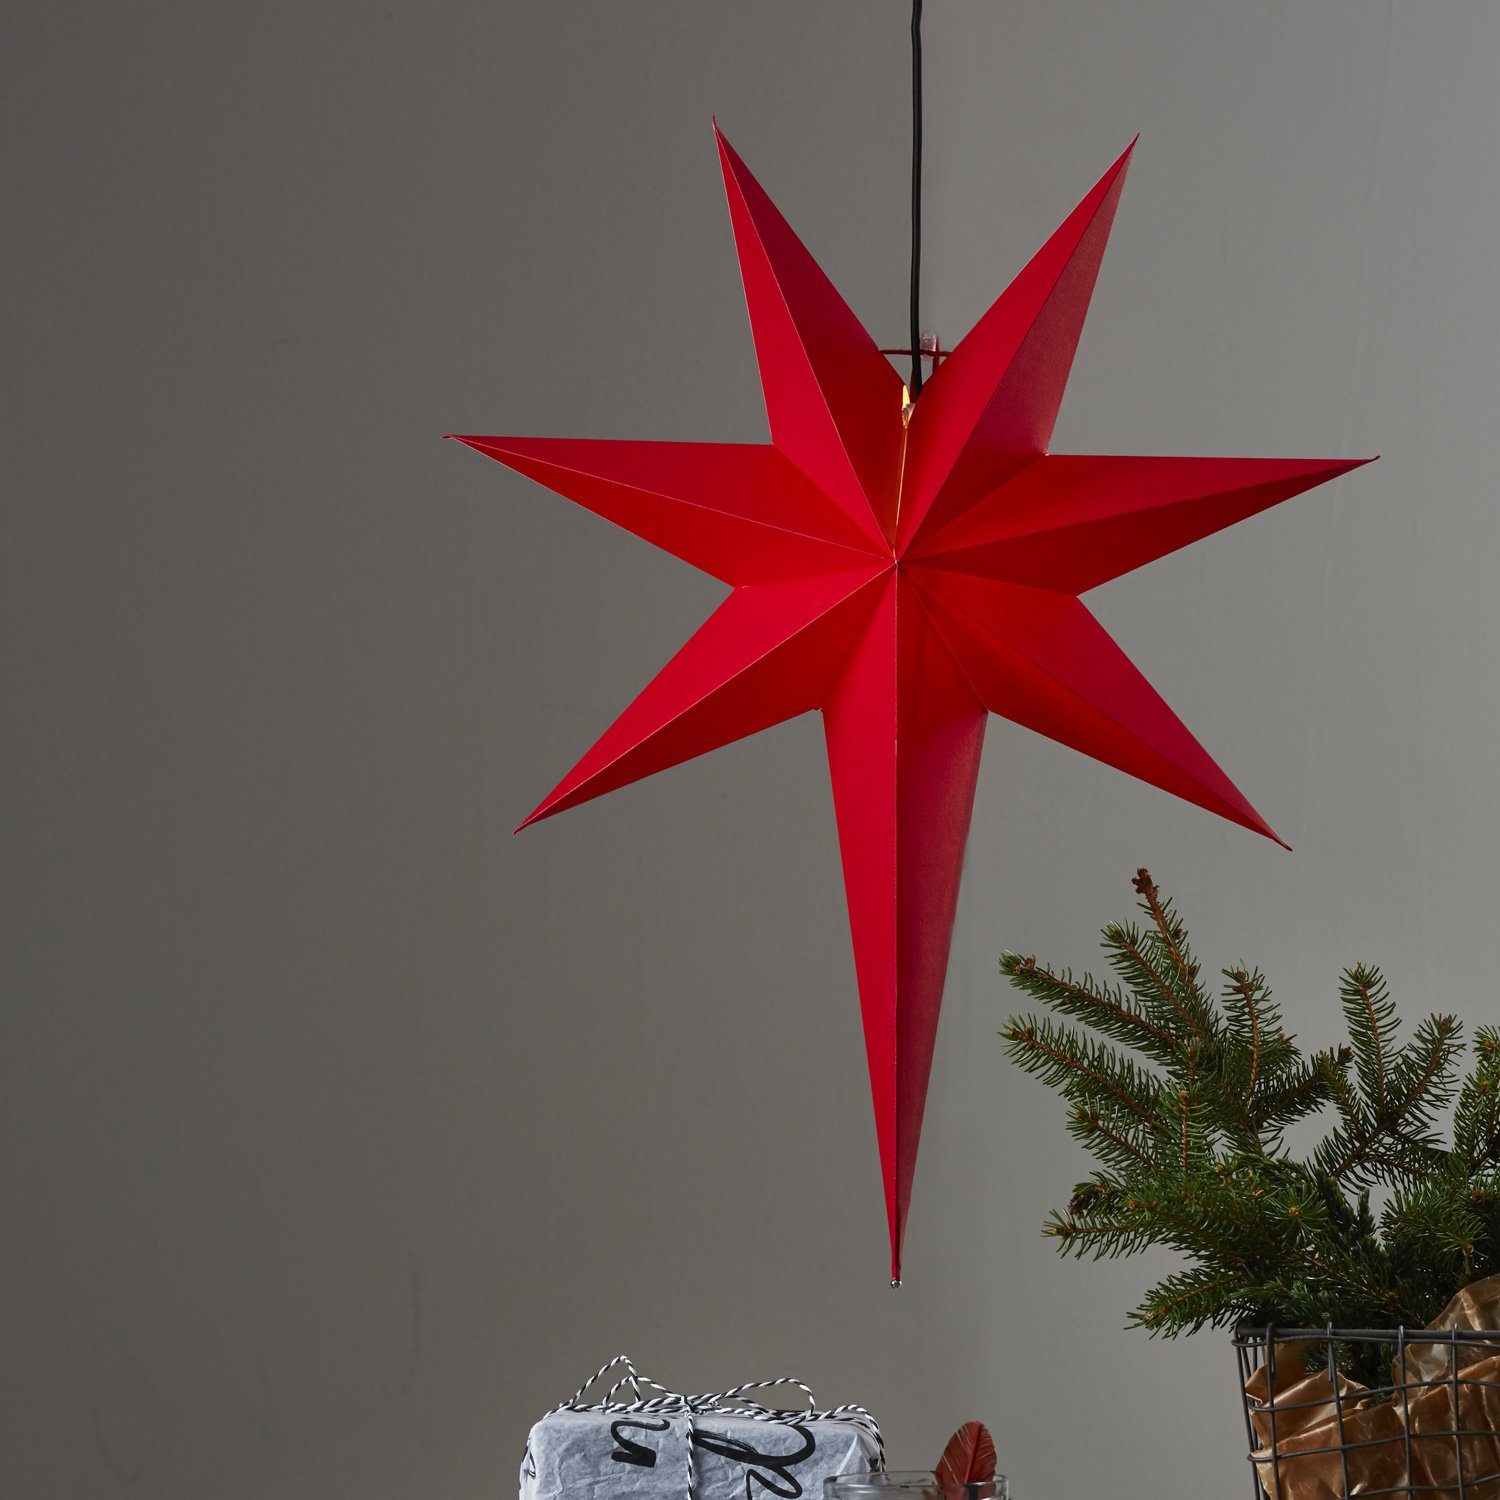 Papierstern rot hängend 7-zackig Leuchtstern STAR LED TRADING Kabel mit 55cm Faltstern Stern